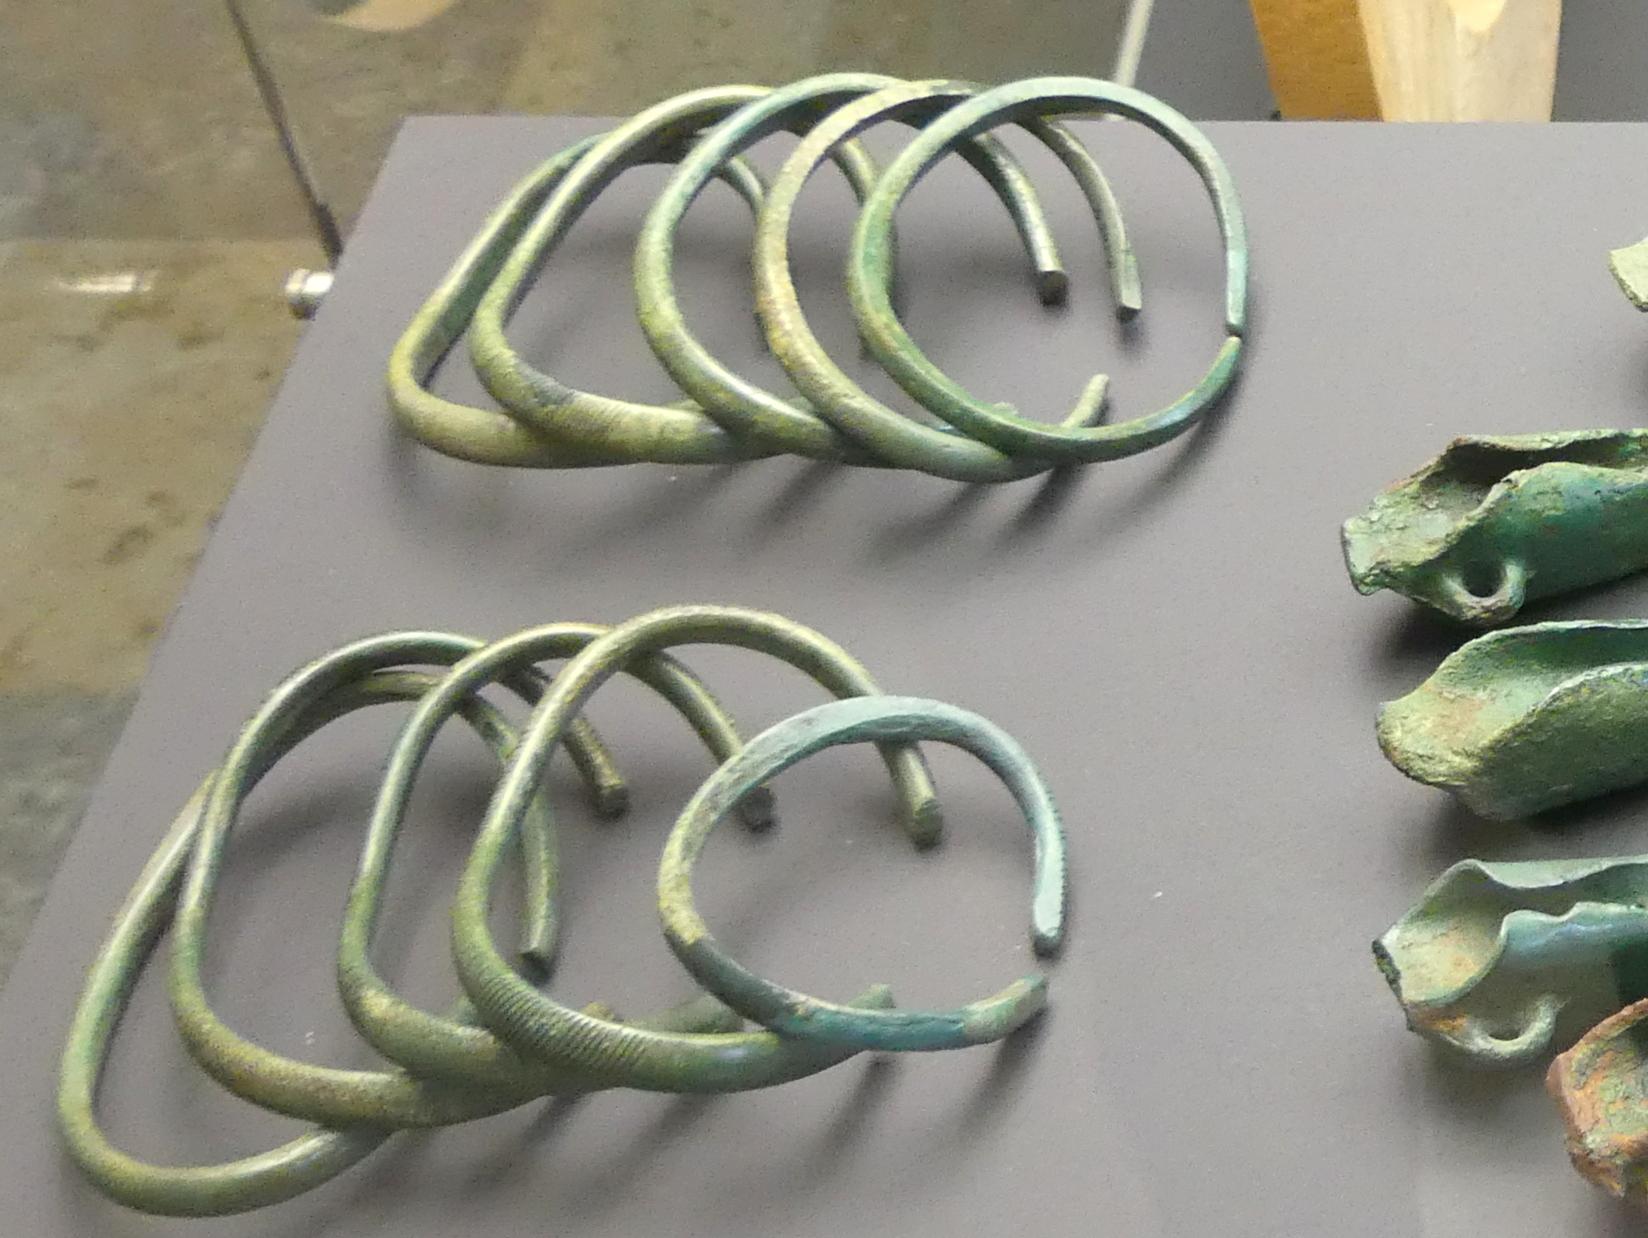 Zwei Ringsätze aus je fünf Schaukelringen, Urnenfelderzeit, 1400 - 700 v. Chr., 900 - 700 v. Chr., Bild 1/2